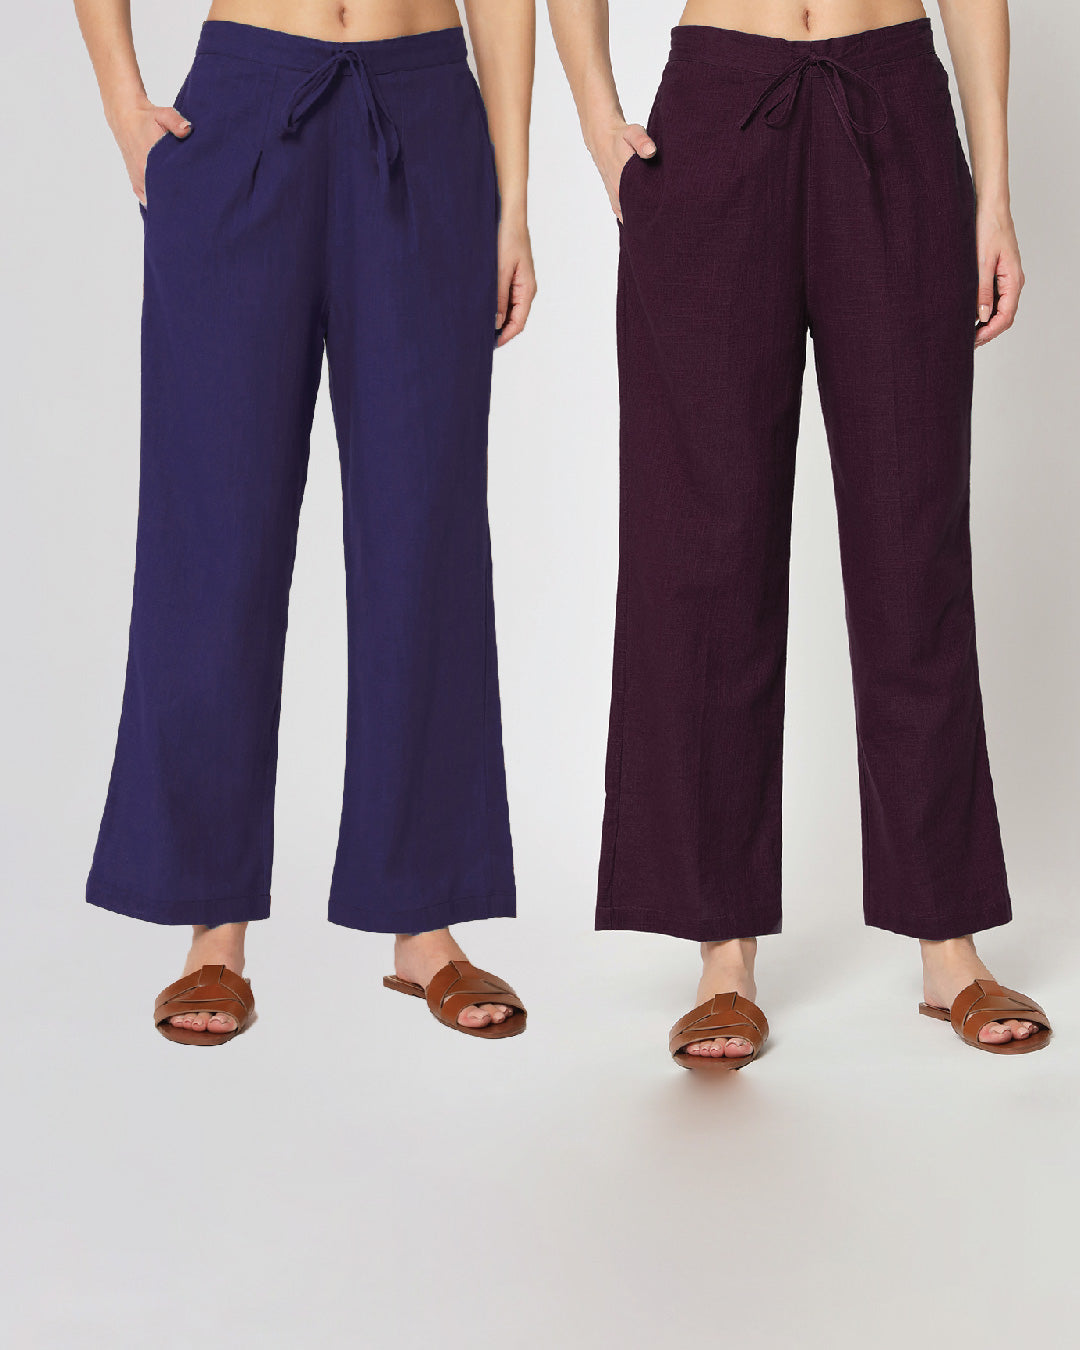 Combo: Aurora Purple & Plum Passion Straight Pants- Set of 2